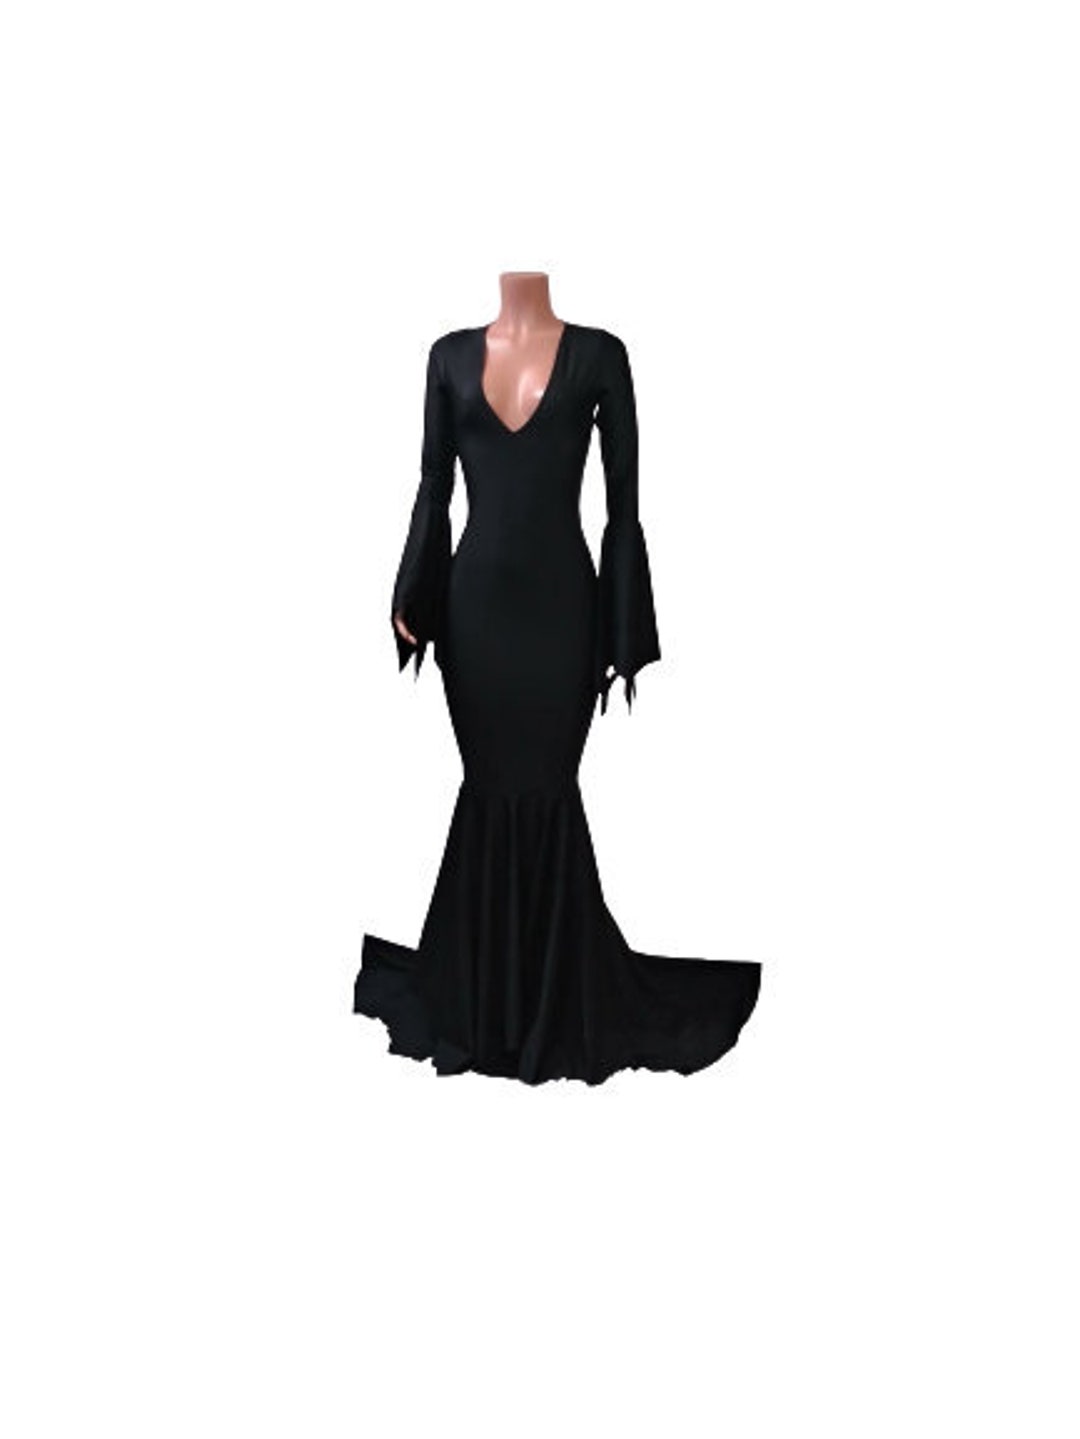 Black spandex/spanks  Favorite dress, Clothes design, Sleepwear